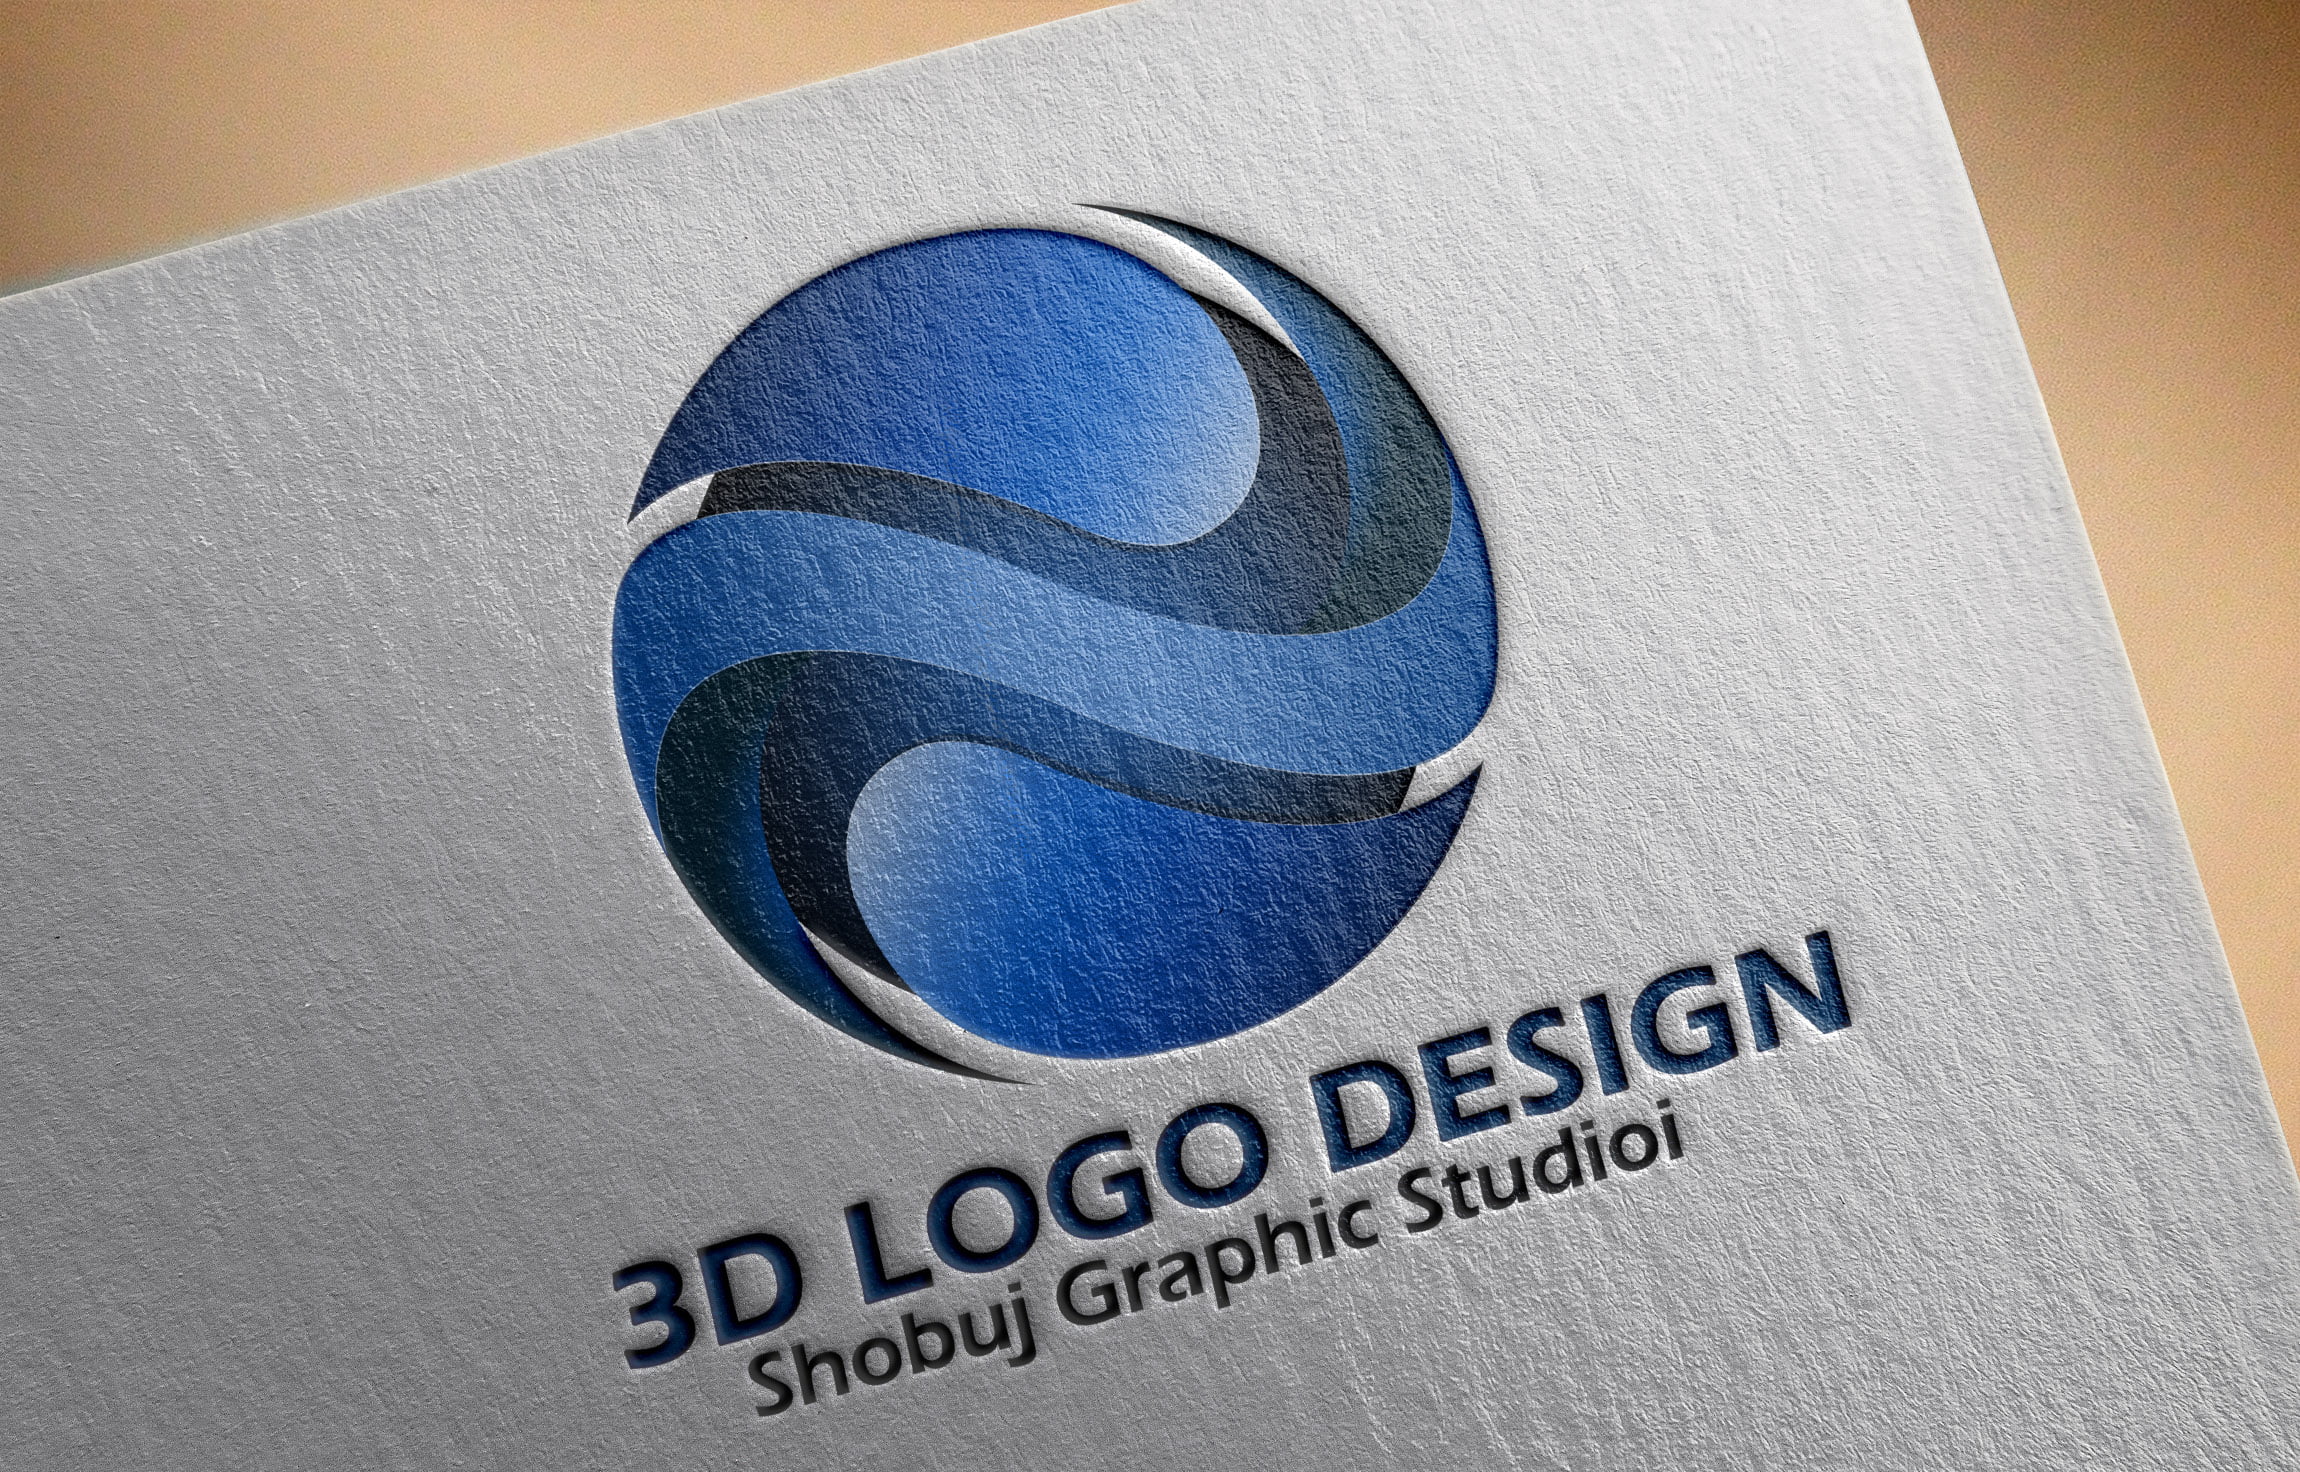 free software to make my logo 3d